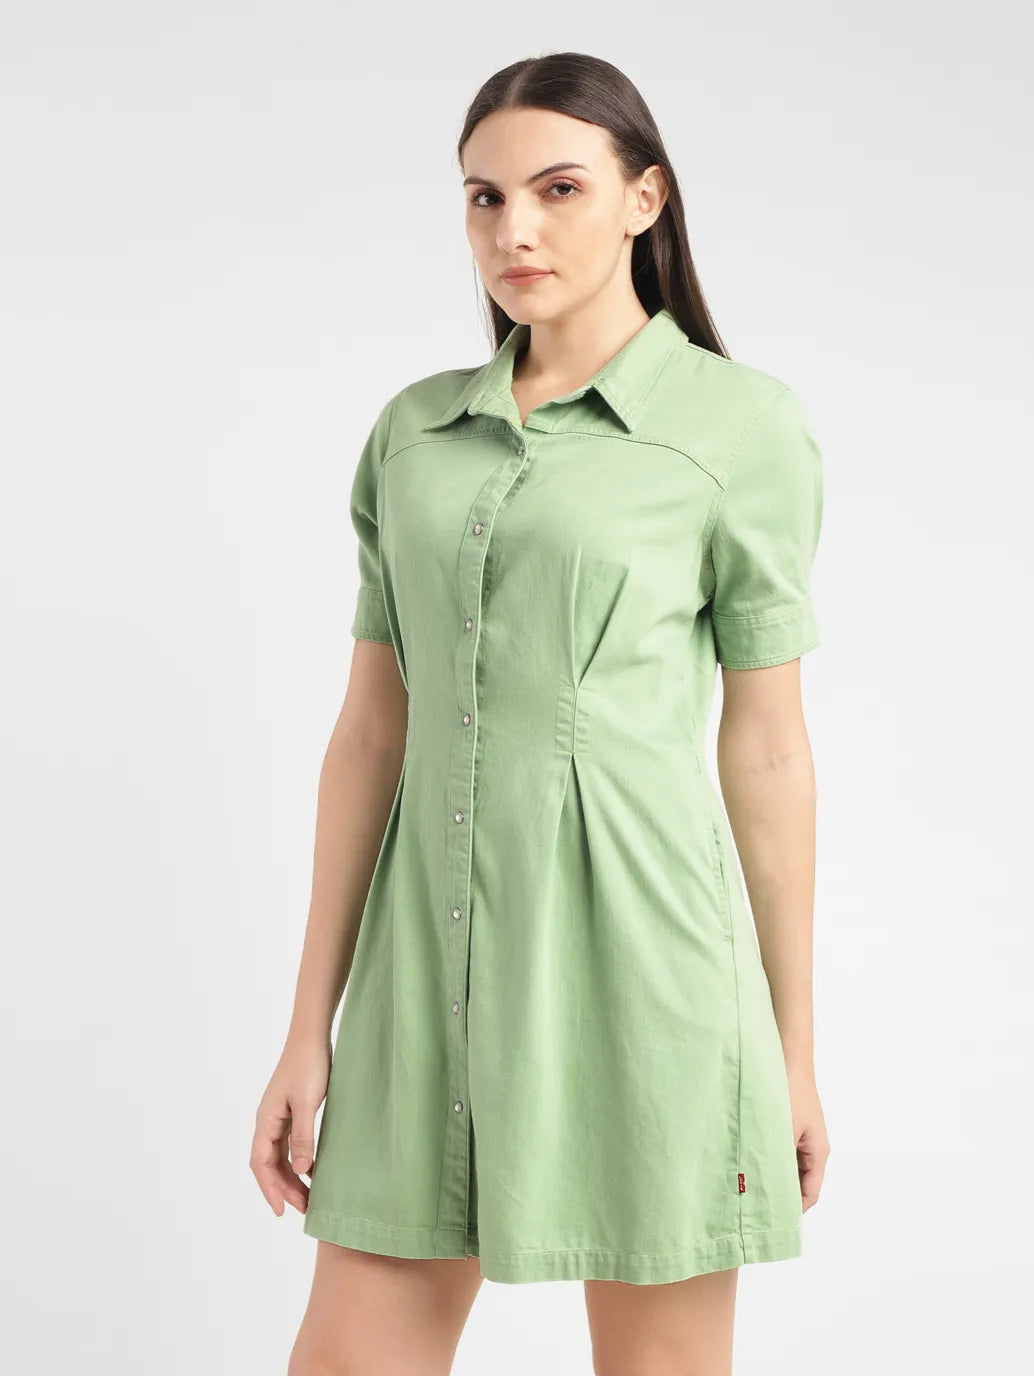 Women's Solid Green Spread Collar Dress